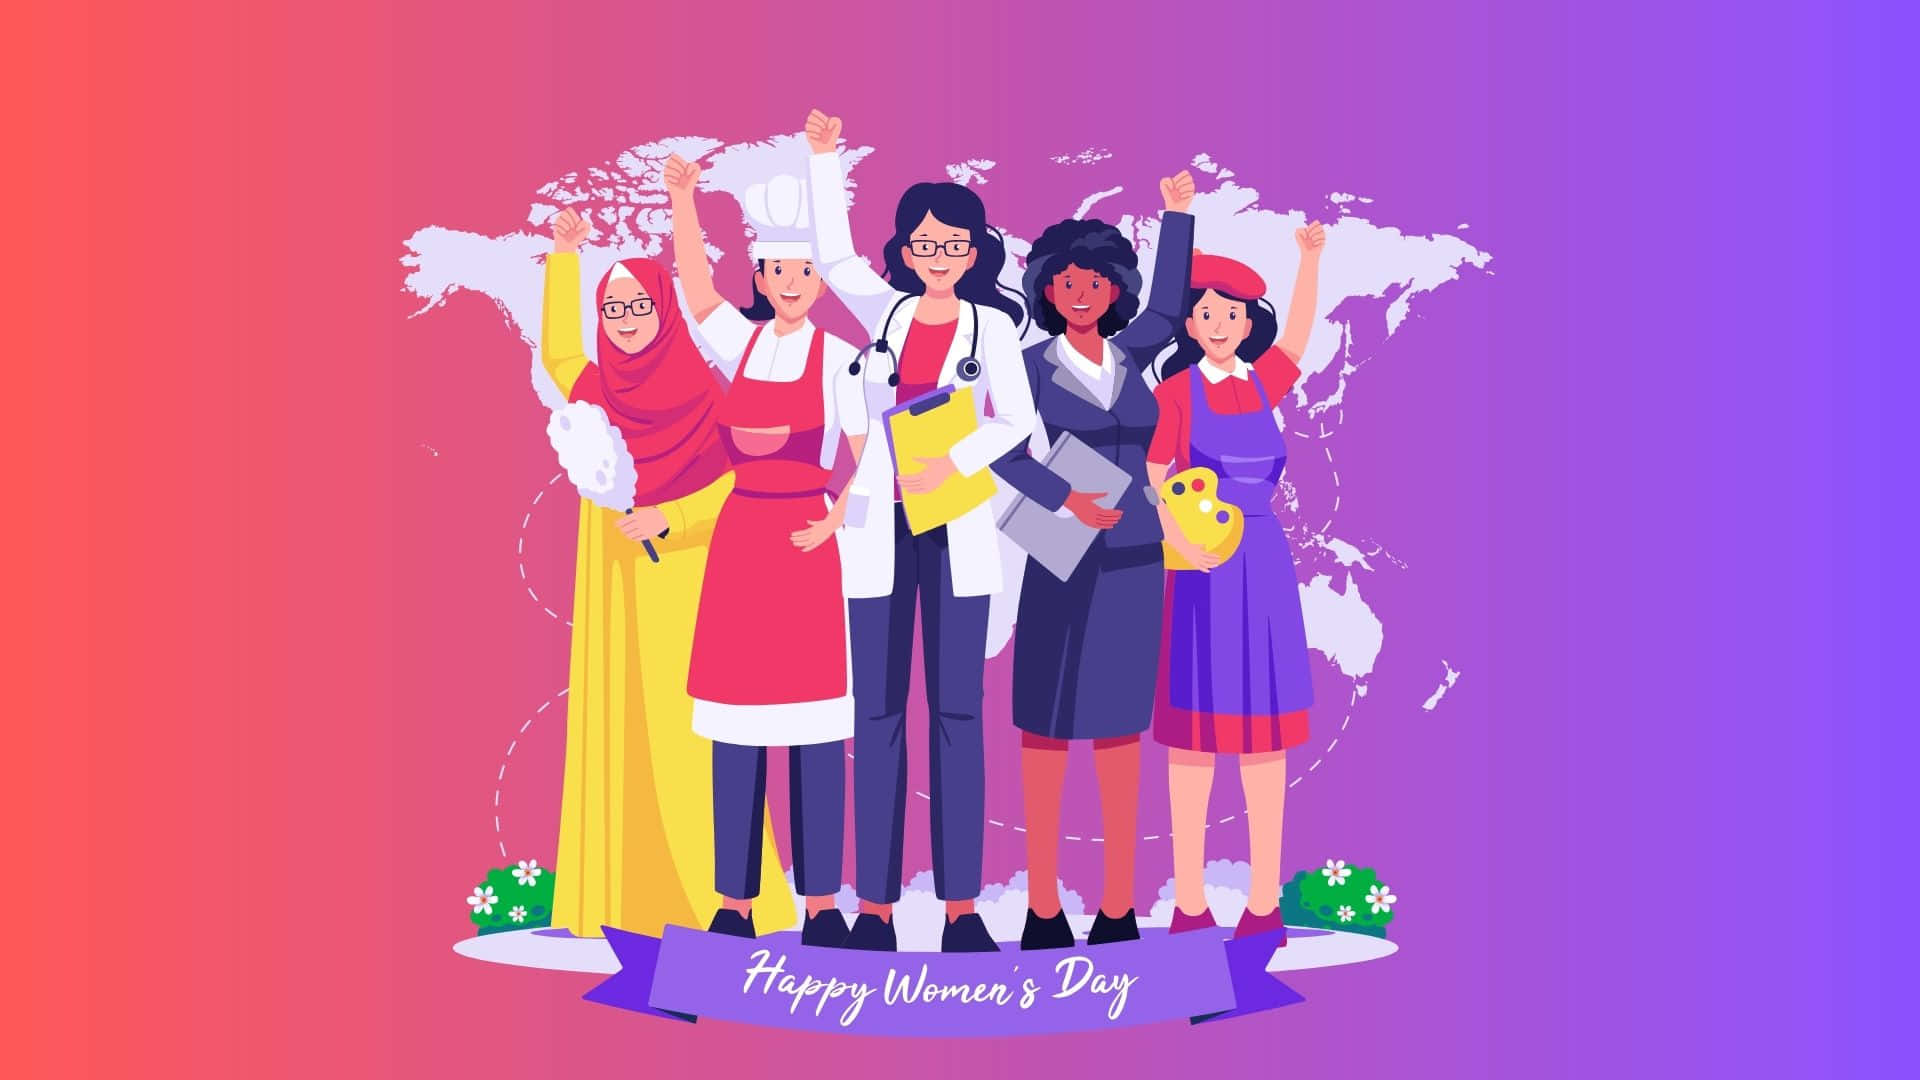 International Women's Day Wallpaper